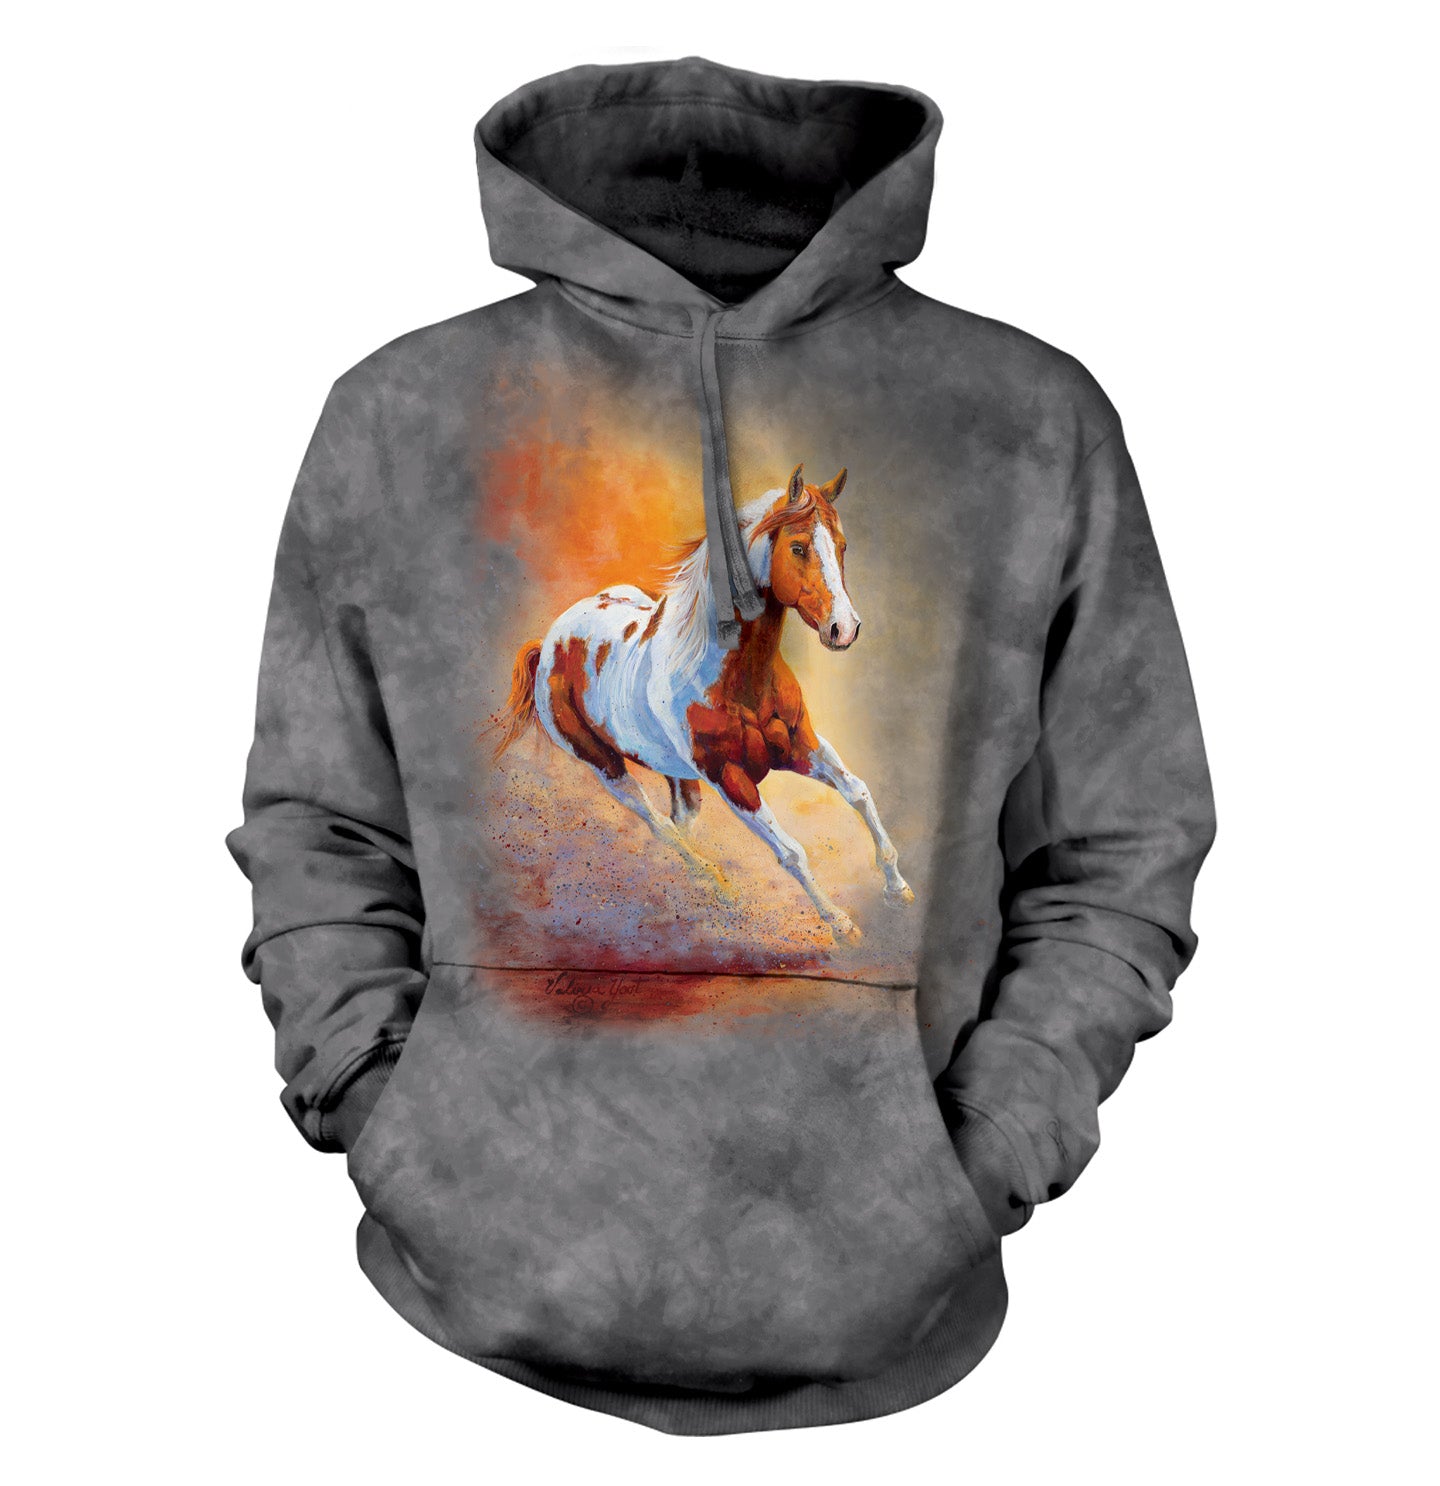 The Mountain - Sunset Gallop - Adult Unisex Hoodie Sweatshirt